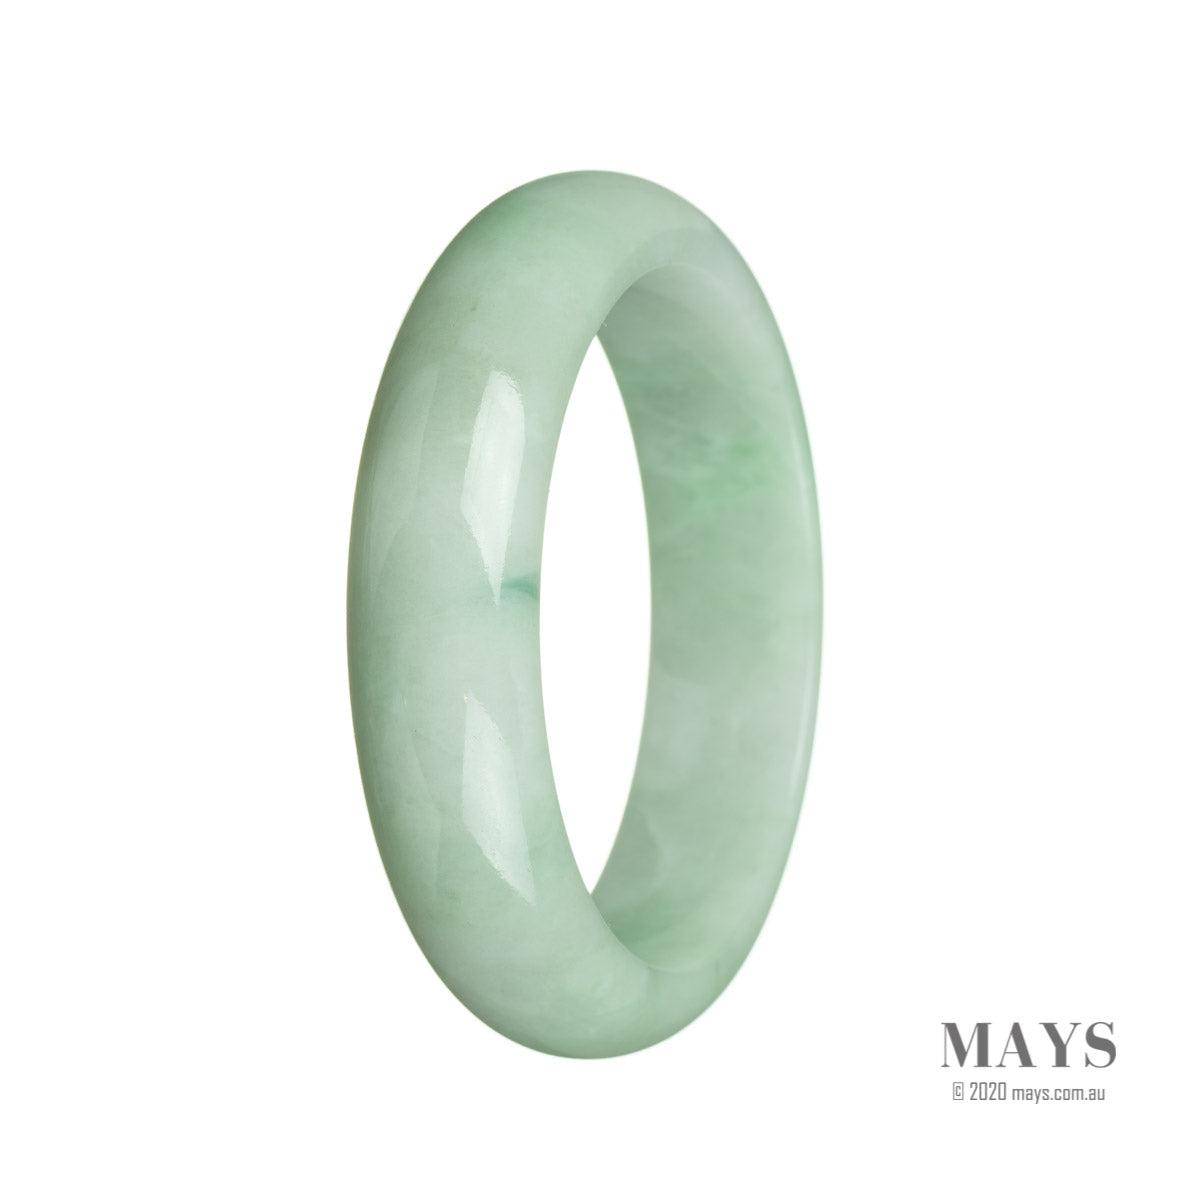 An elegant green jade bangle bracelet with a half-moon shape, certified as natural light green jadeite jade.